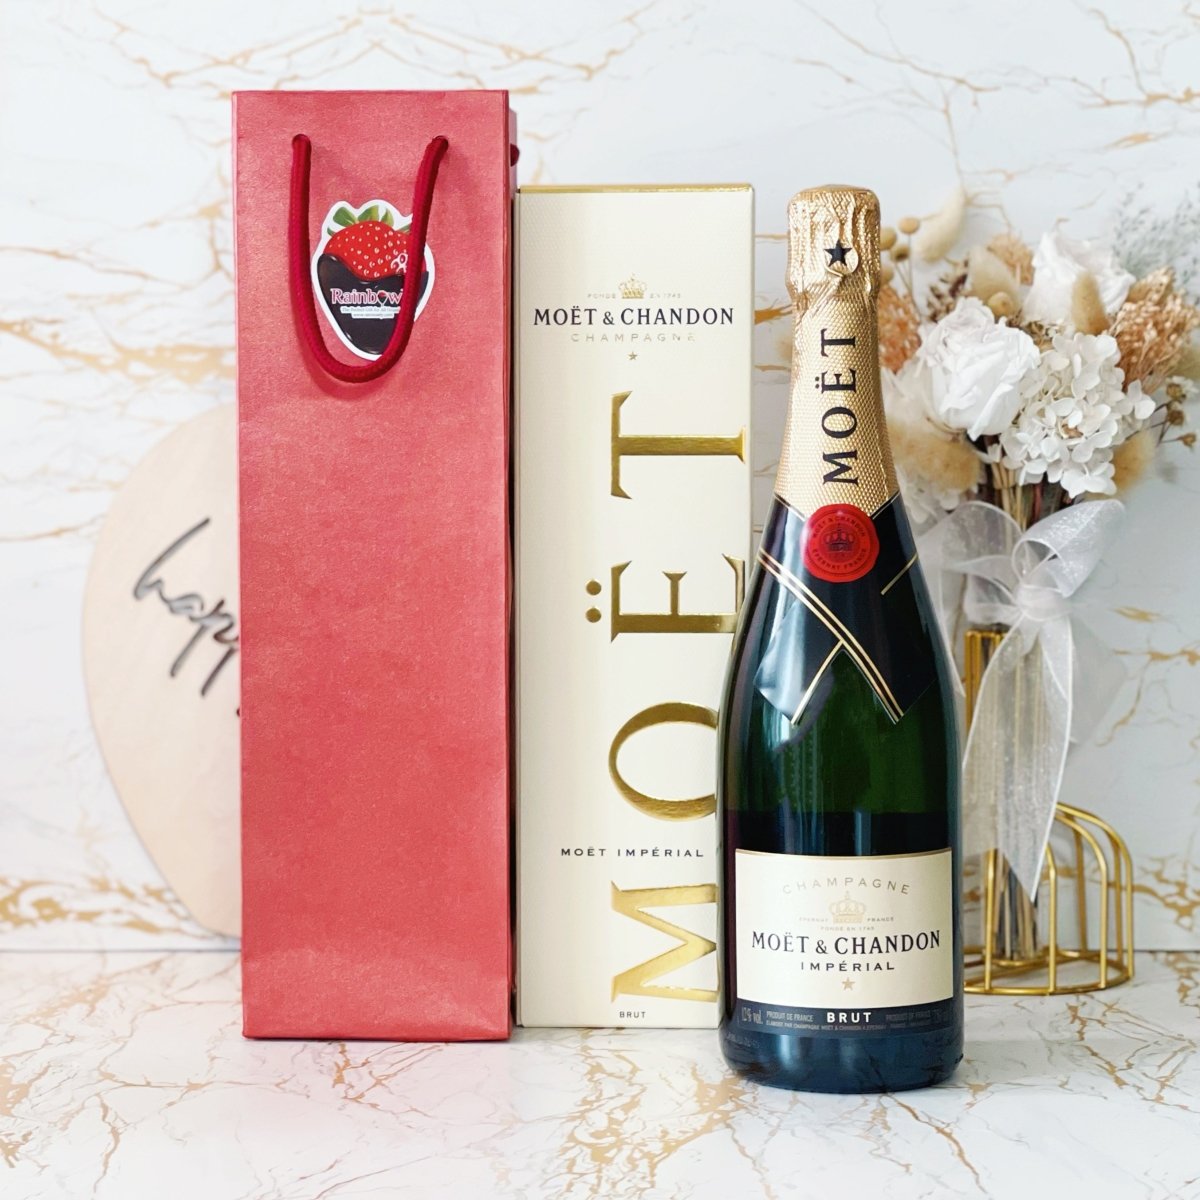 Moët et Chandon Impérial Brut Champagne - Elegant and Nearly Bone